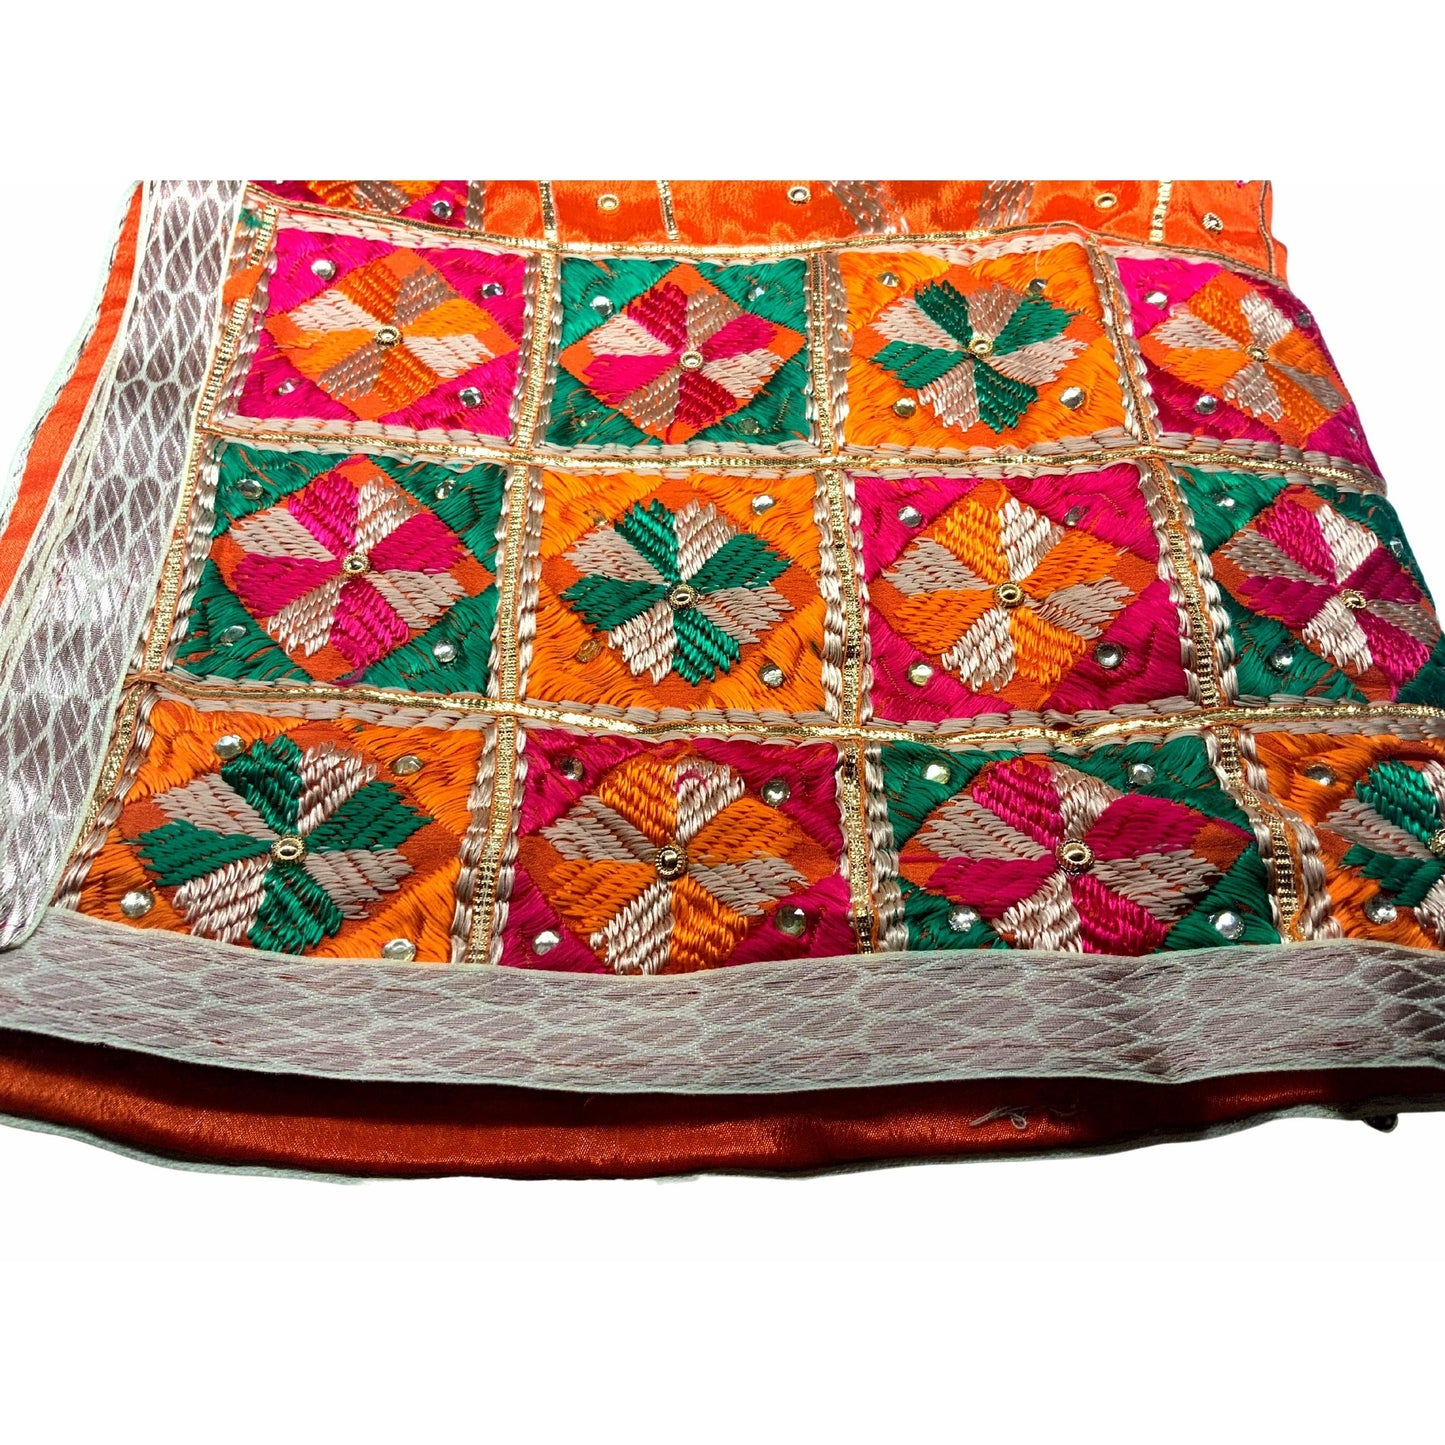 Beautiful Fulkari lehariya pattern with golden lace on all the borders and tessels